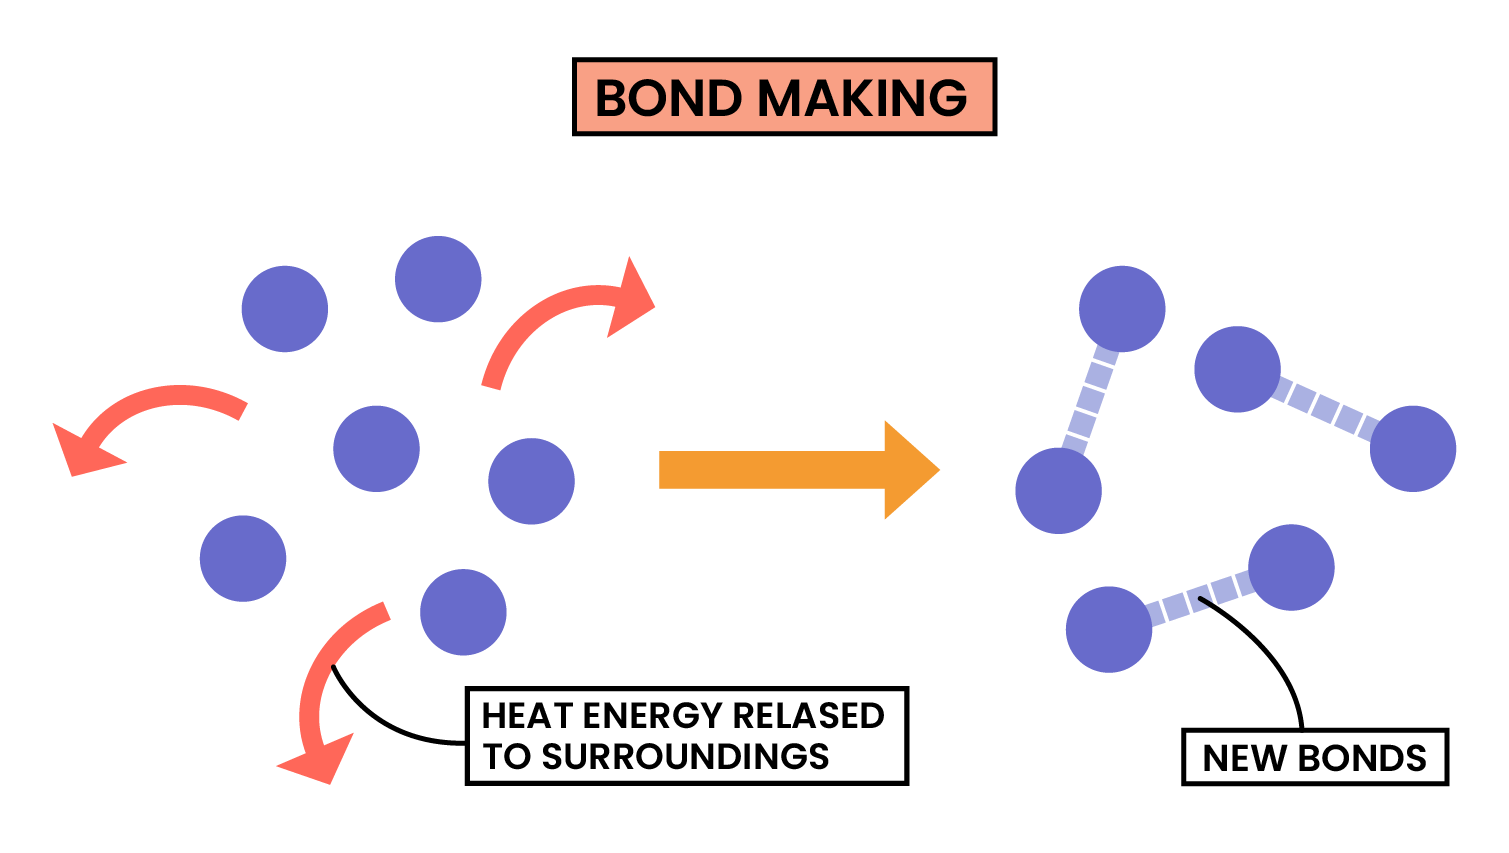 edexcel_igcse_chemistry_topic 18_energetics_007_bond making diagram energy labelled